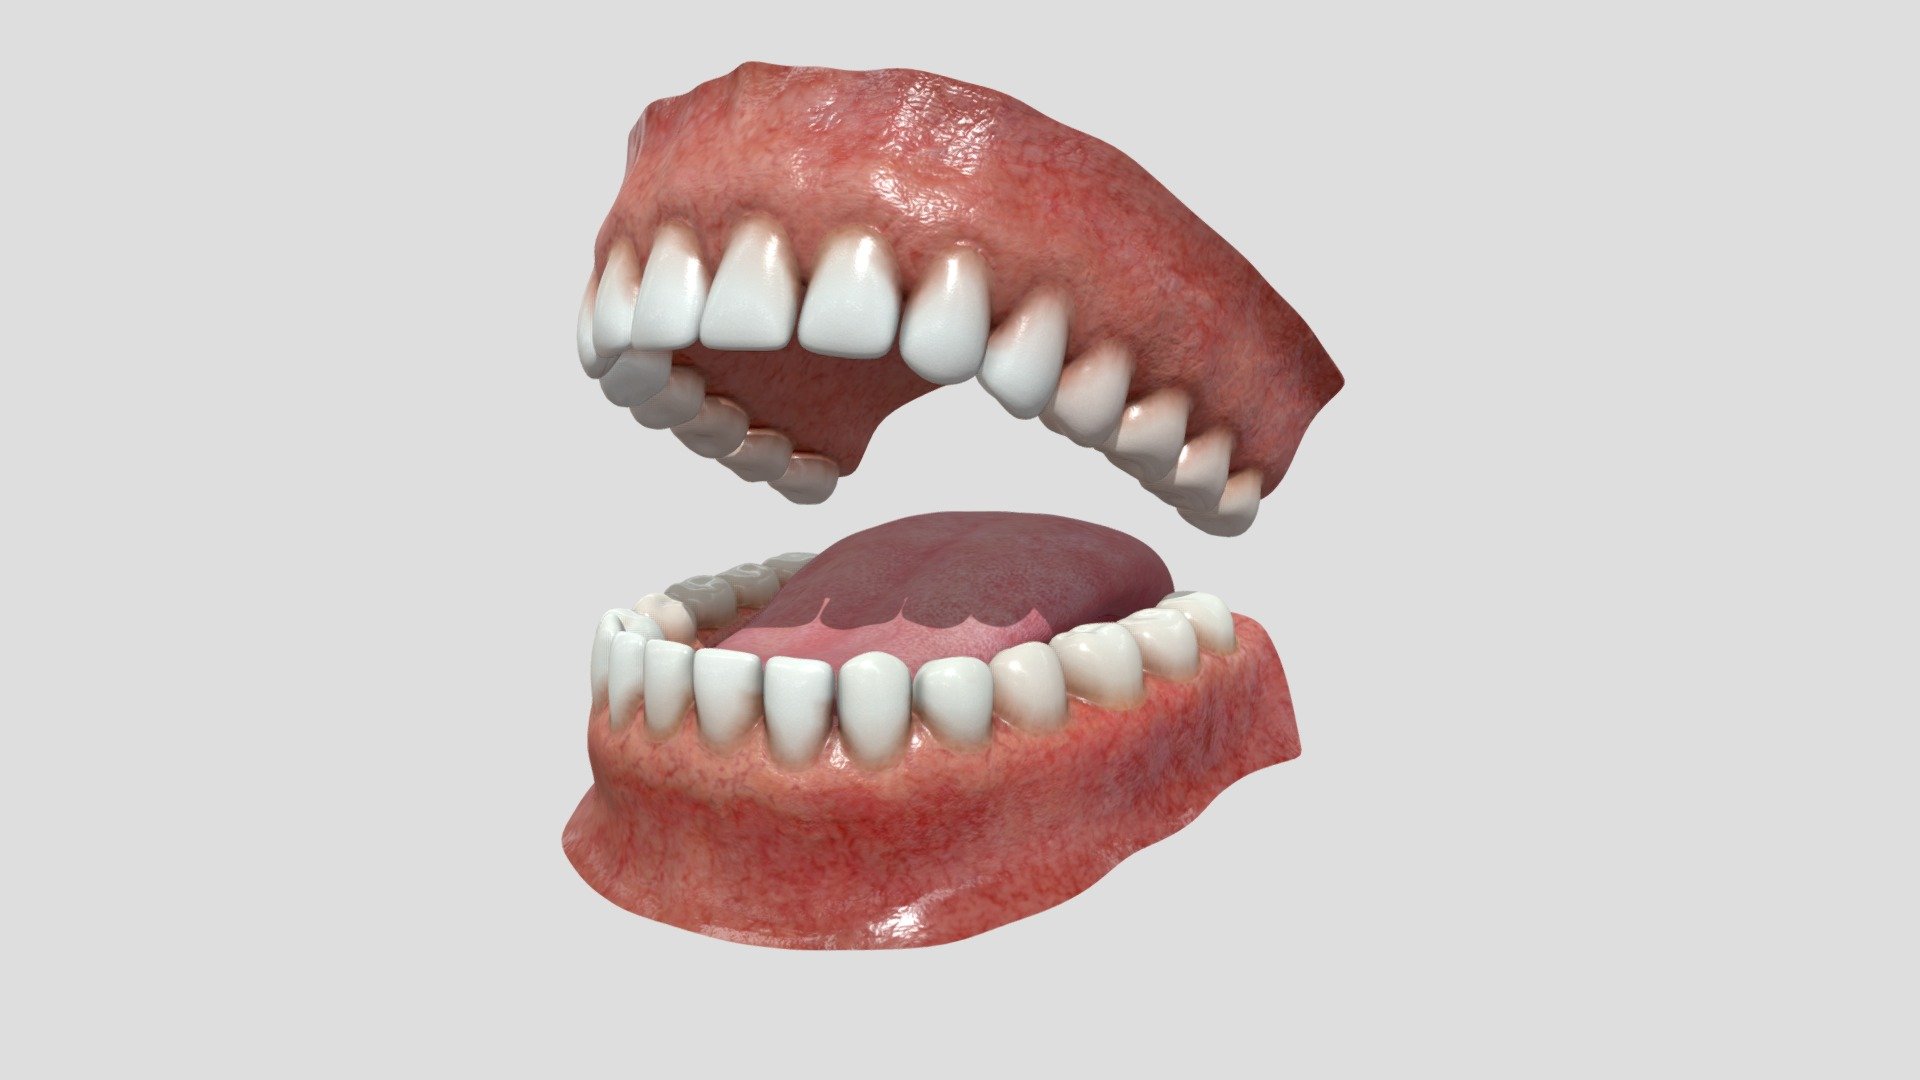 Teeth 3D Model. Ready for Games. PBR Materials. UV Map unwrapped. Textures in 4K. Formats: Lwo, Obj + Mtl, Fbx, Blender 3D 3d model